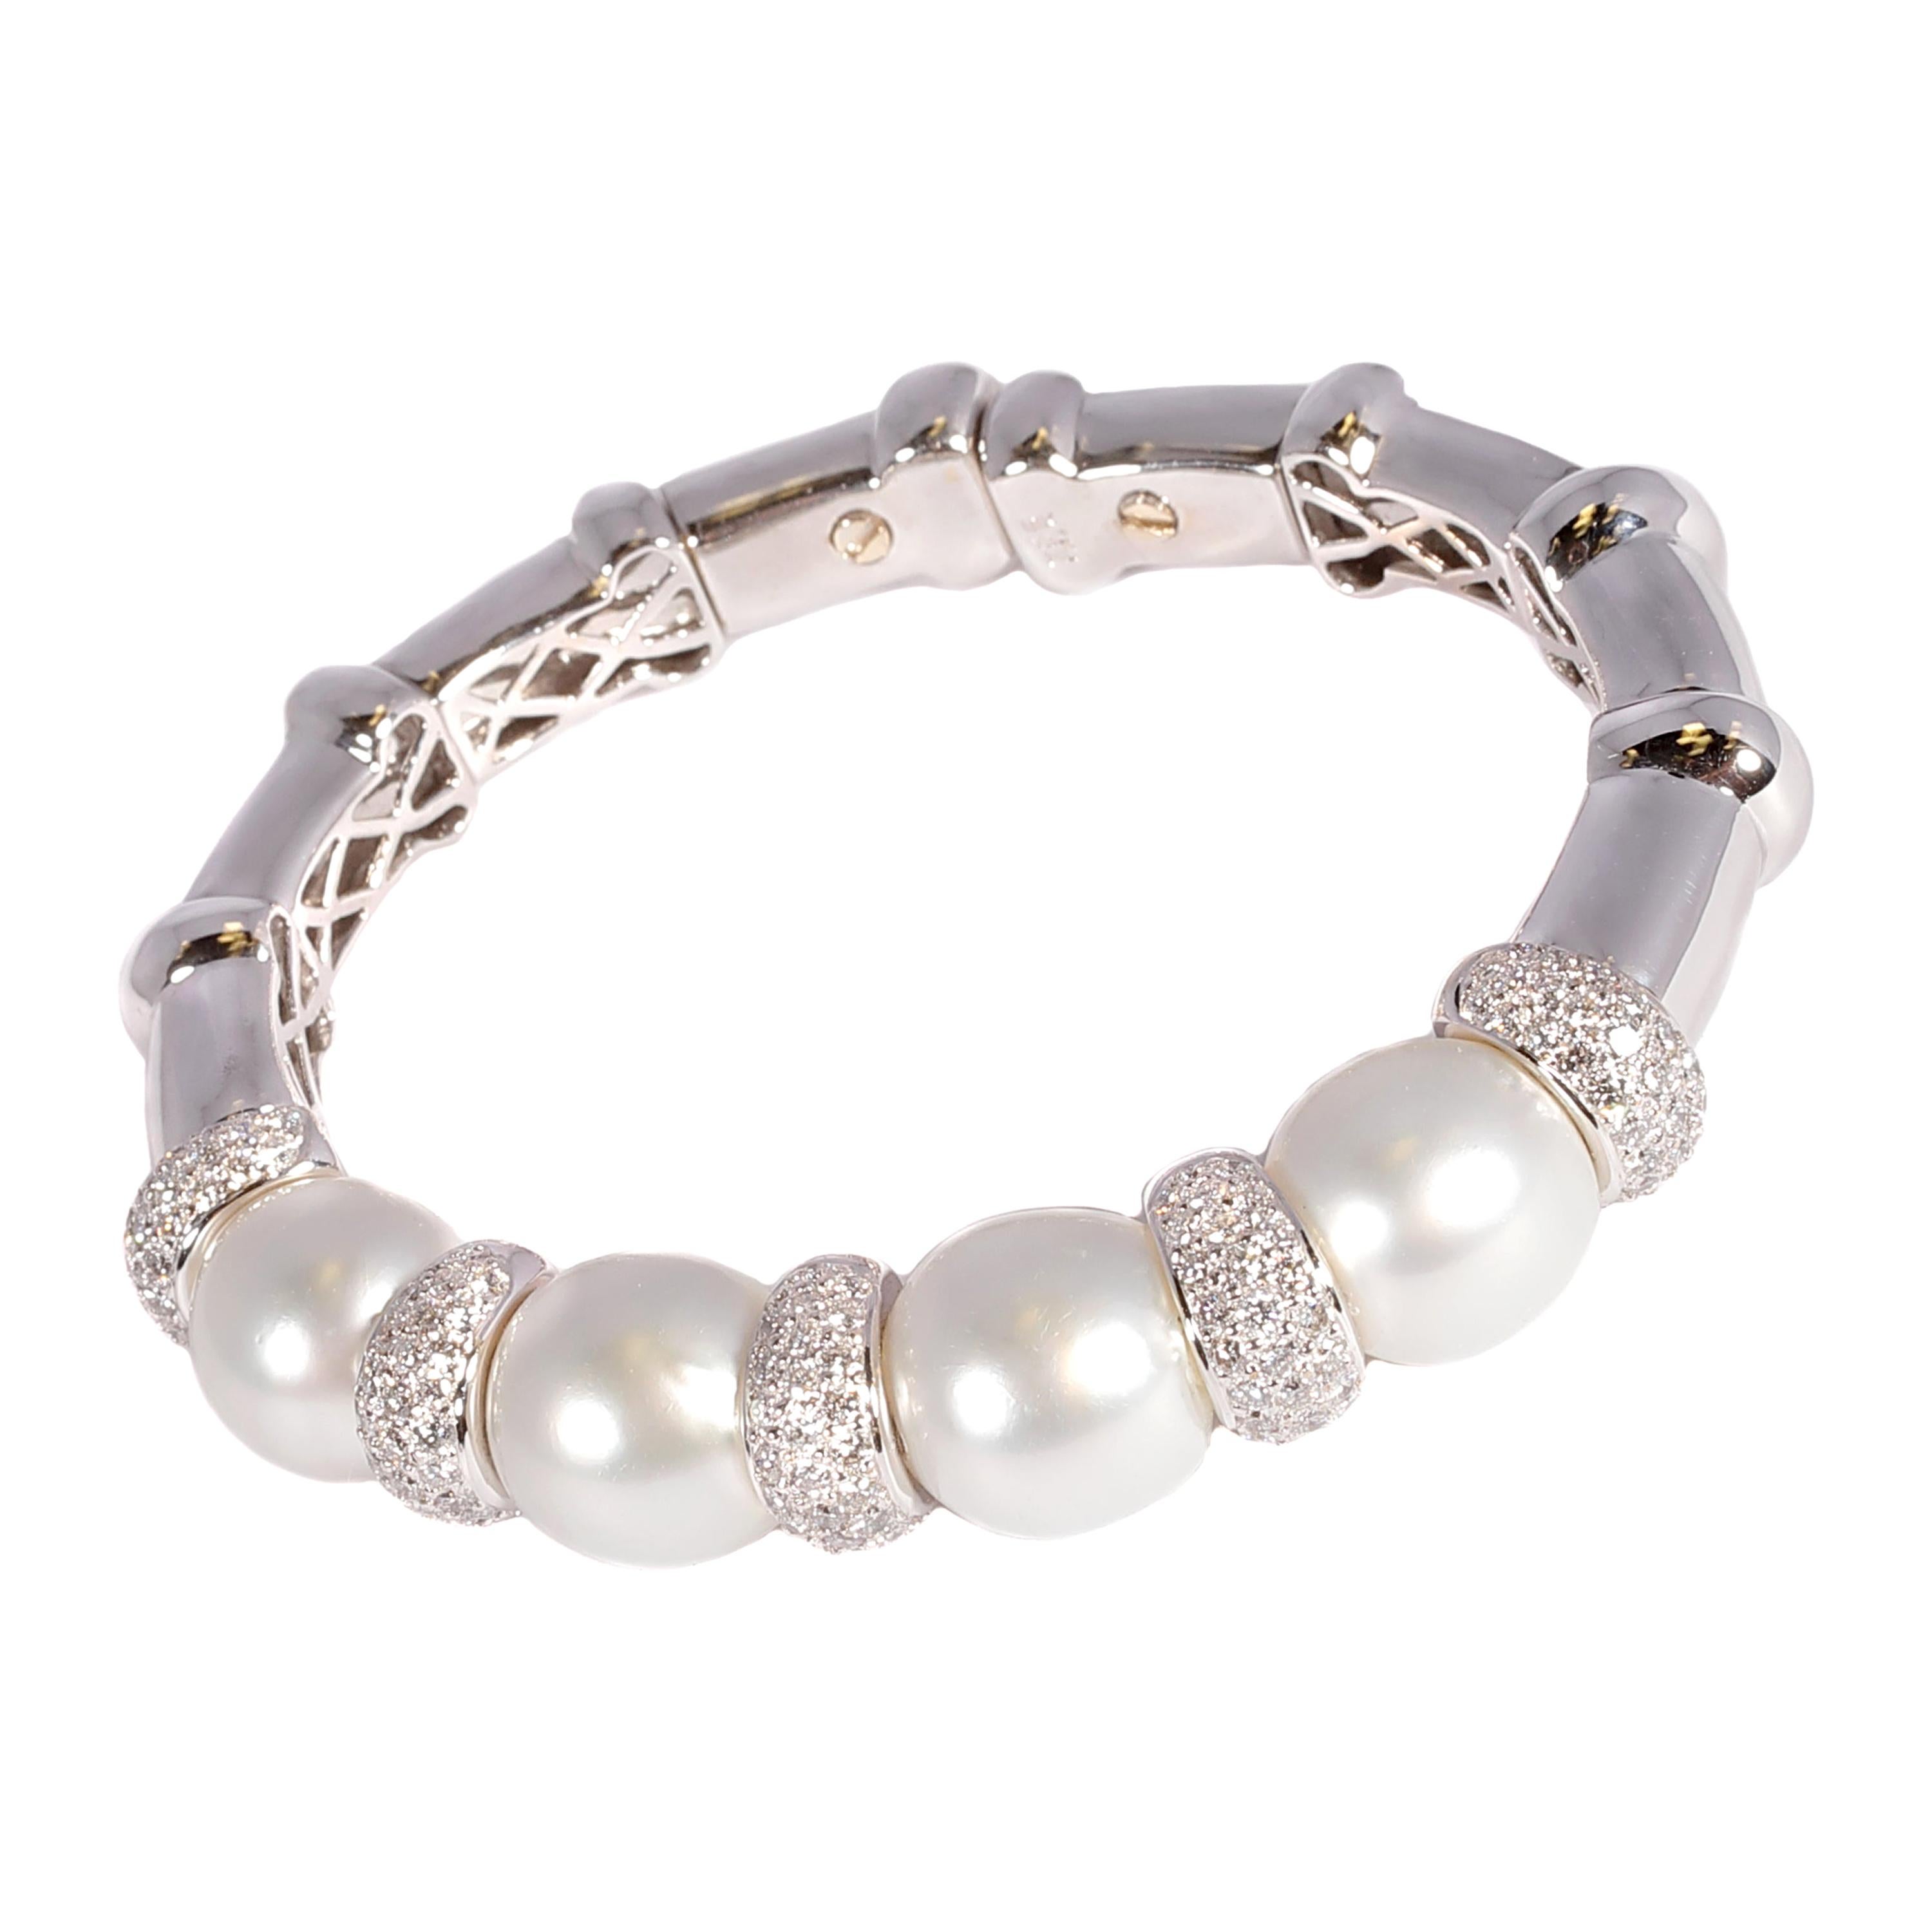 Maison Maurice White Gold South Sea Pearl 3.21 Carat Diamond Bracelet